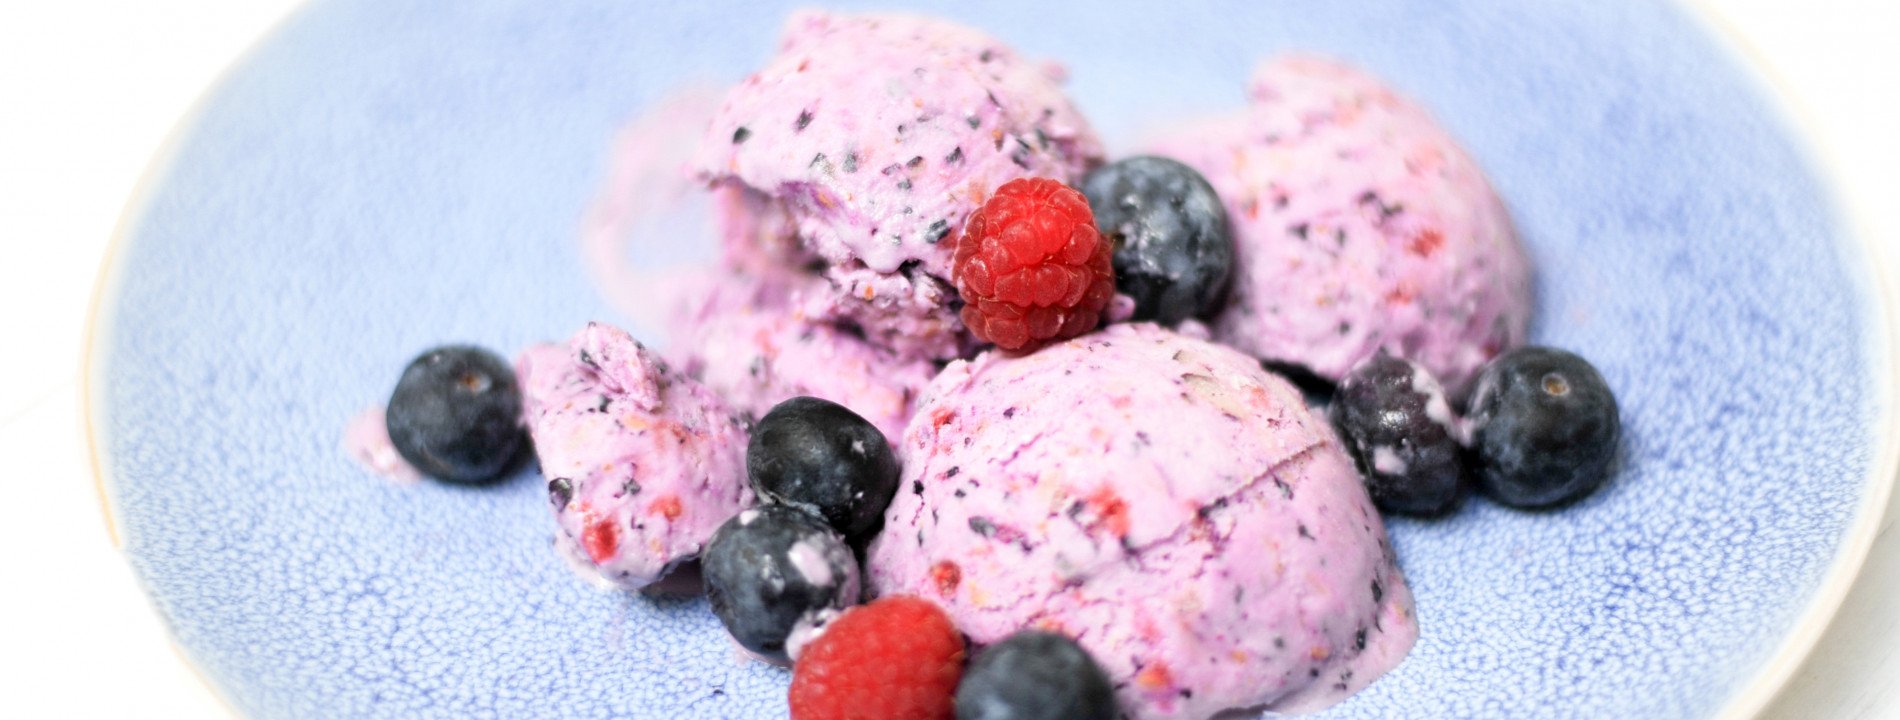 Raspberries and Blueberries Ice Cream